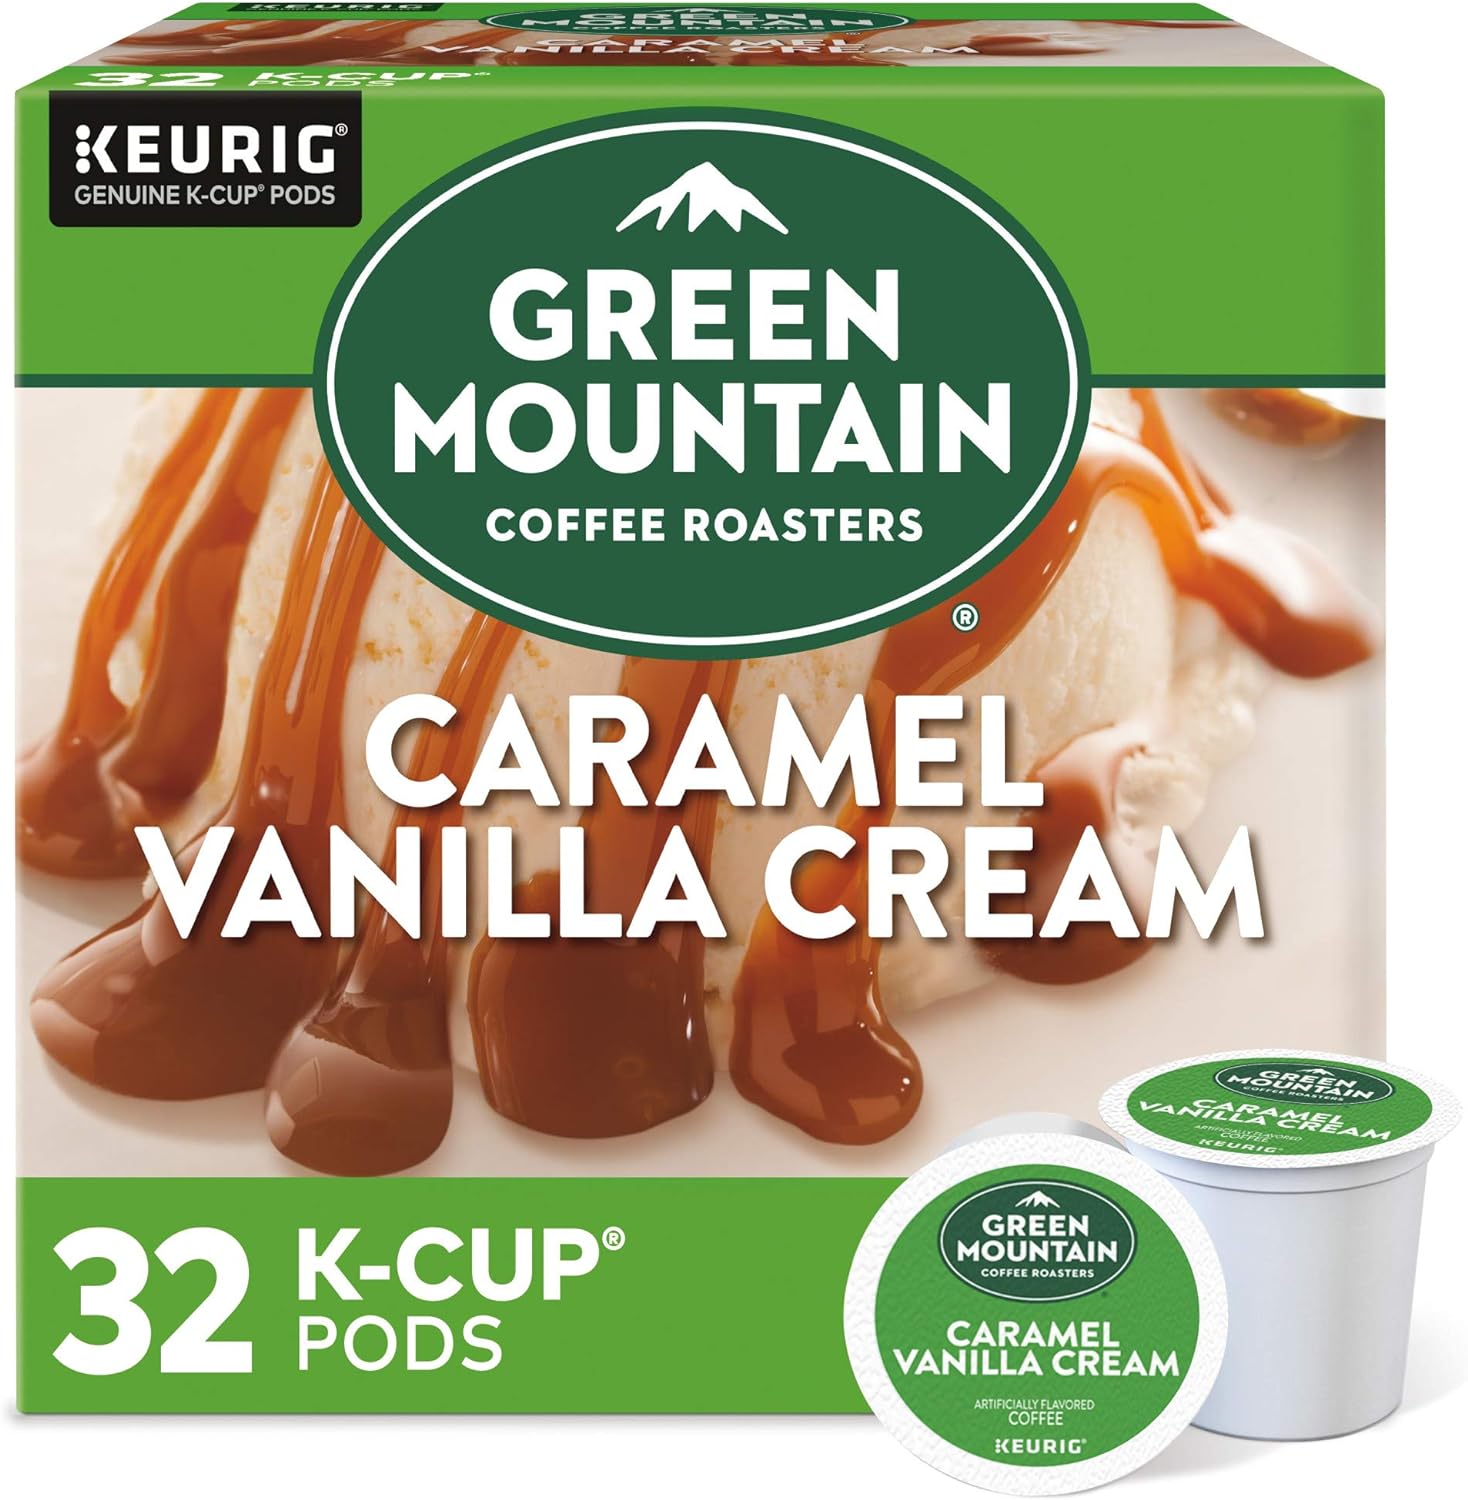 Green Mountain Coffee Roasters Caramel Vanilla Cream, Single-Serve Keurig K-Cup Pods, Flavored Light Roast Coffee Pods, 32 Count